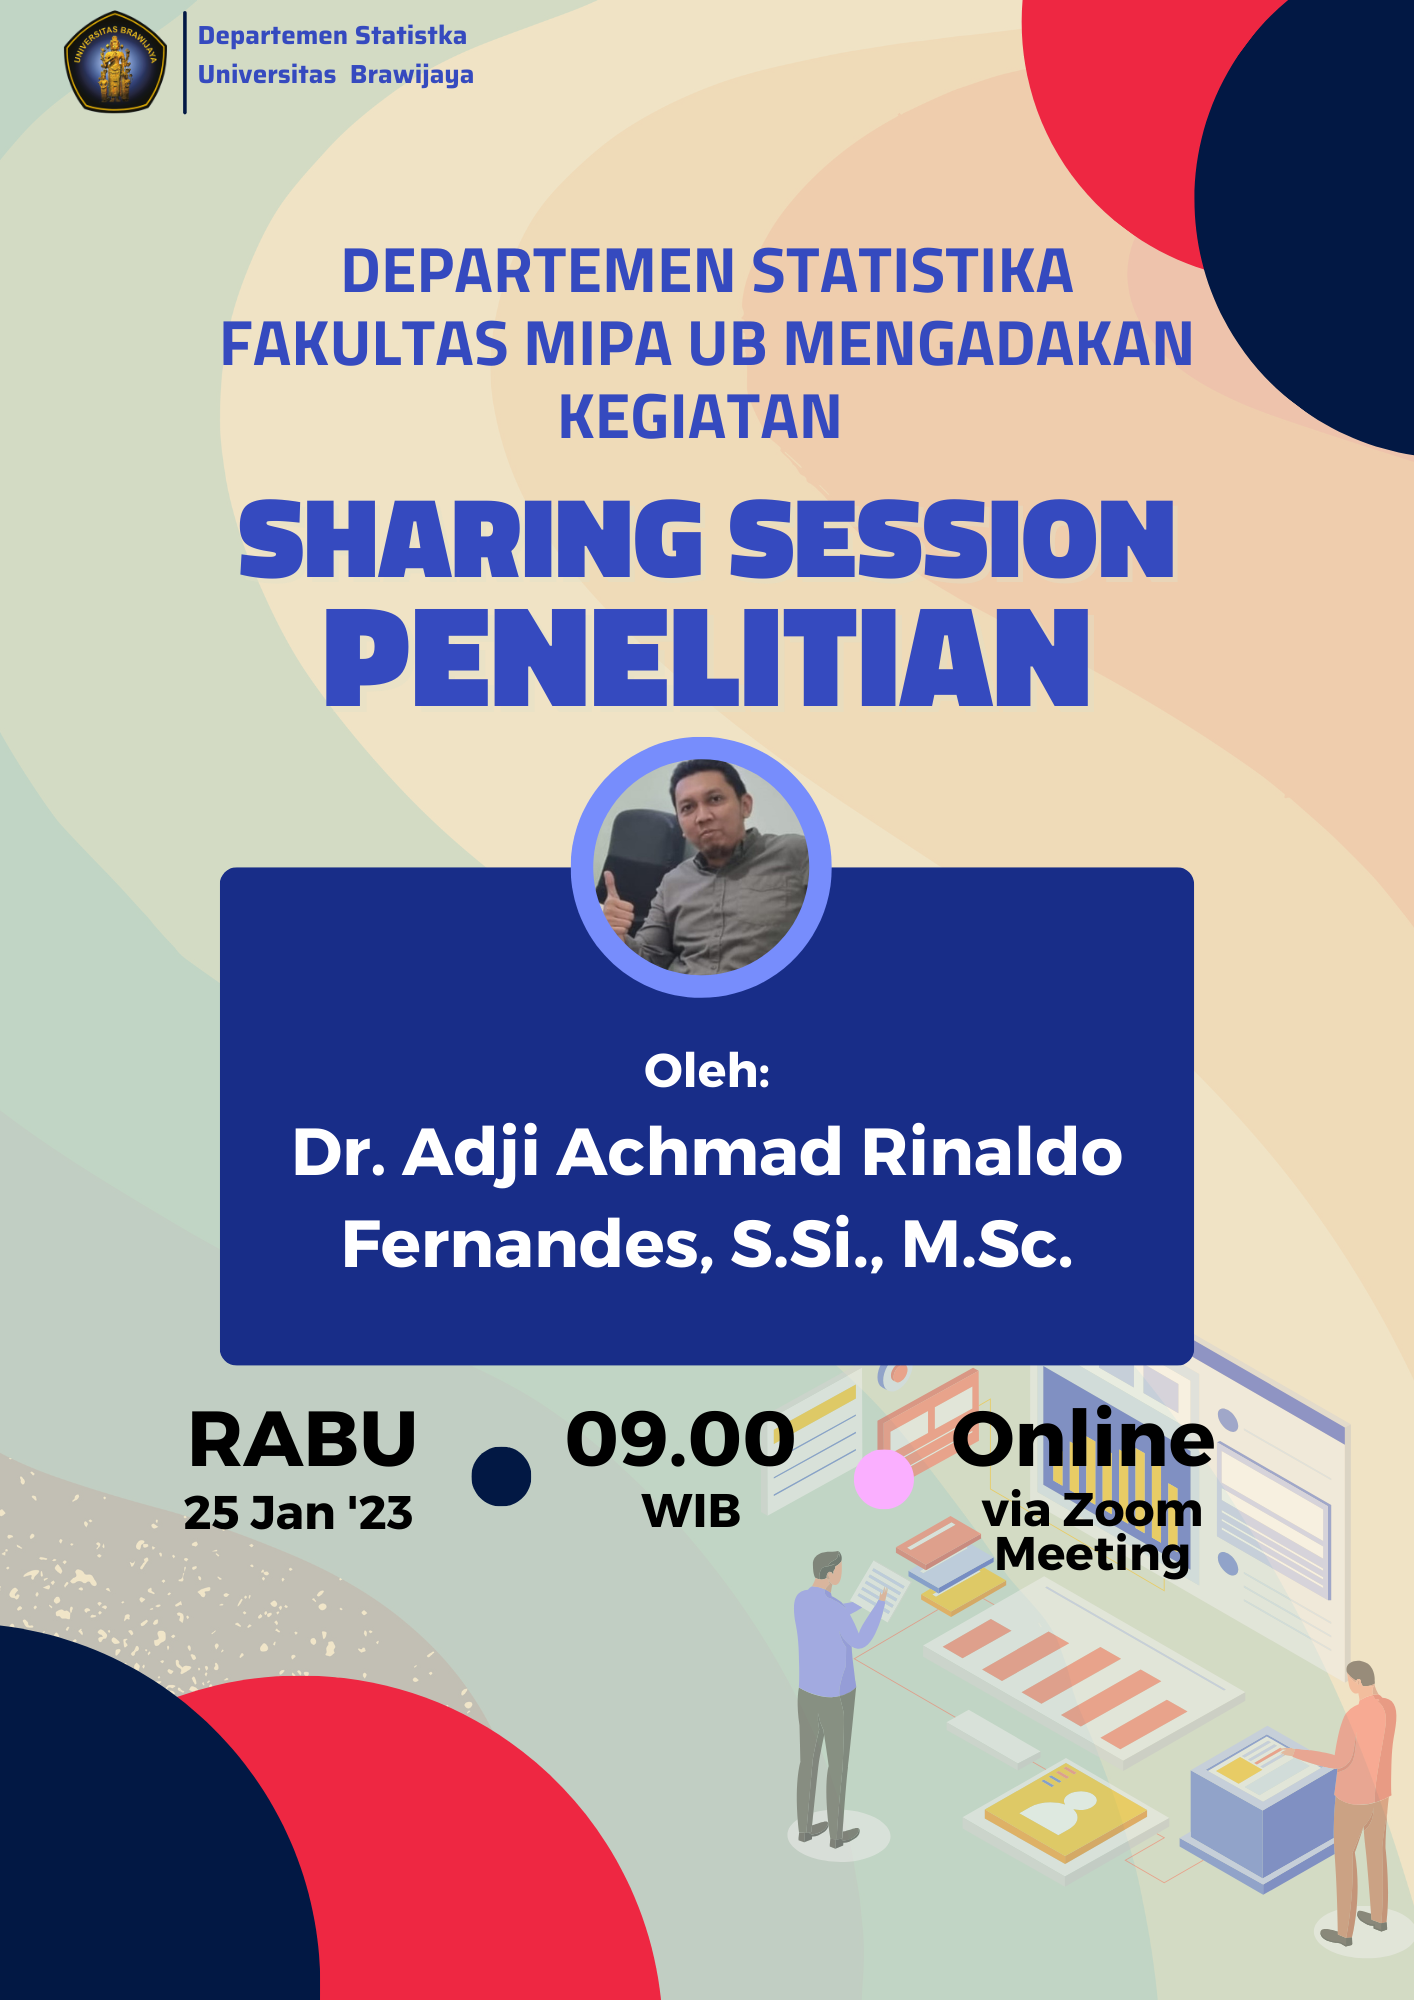 Sharing Session Penelitian oleh Dr. Adji Achmad Rinaldo Fernandes, S.Si., M.Sc.